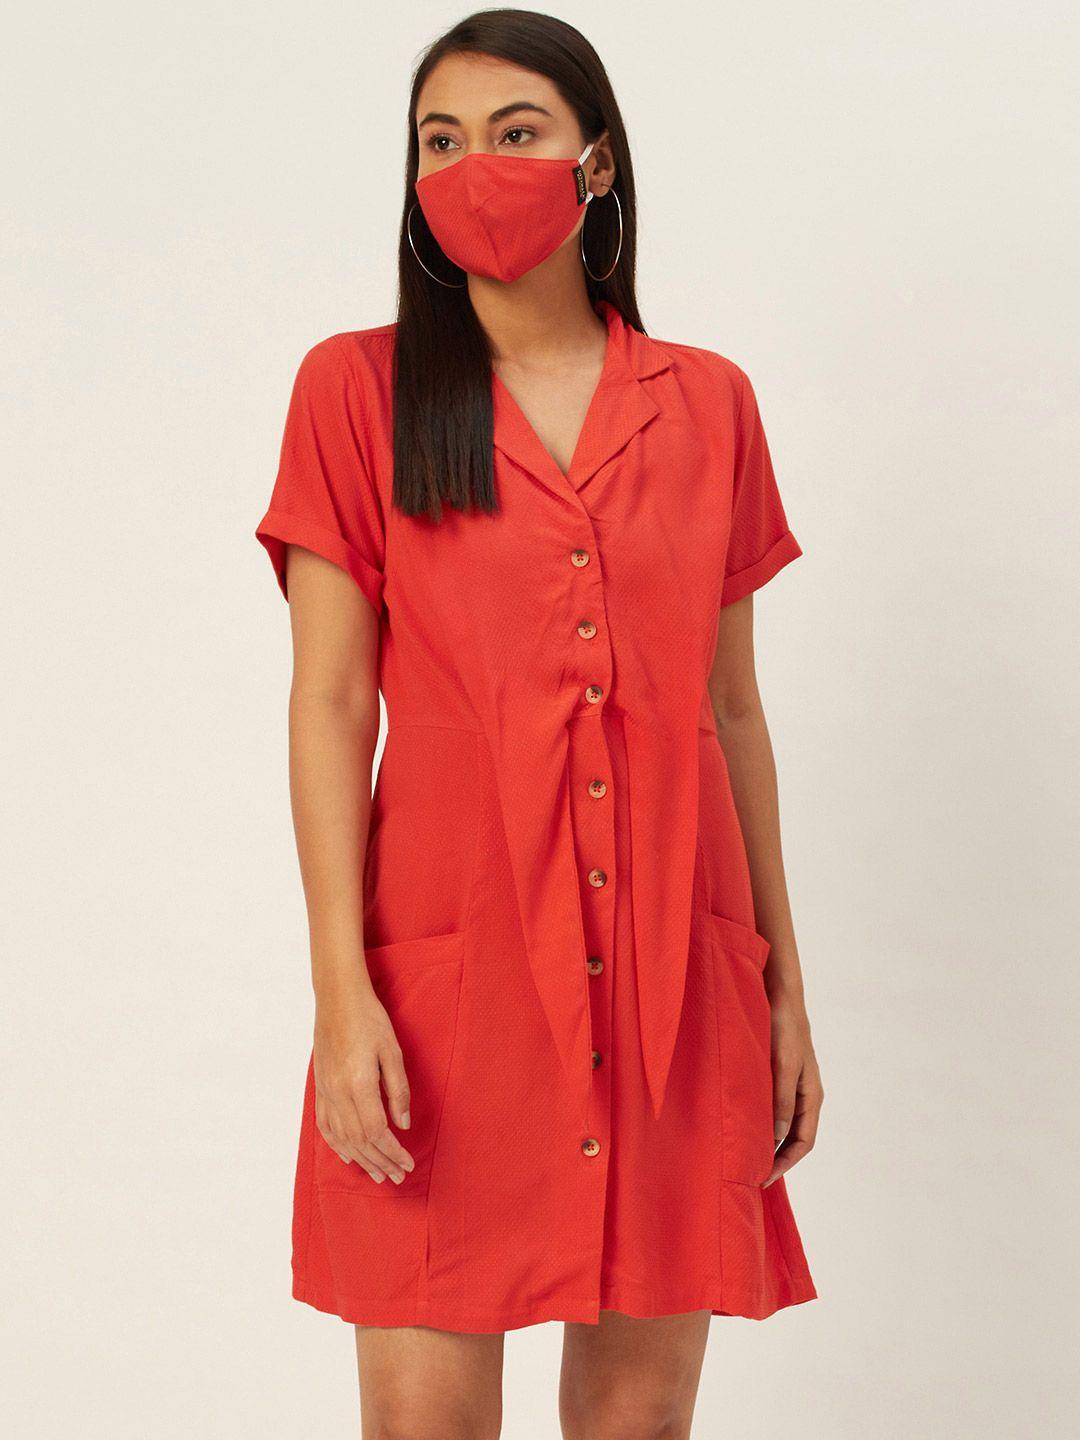 diva walk exclusive red shirt dress